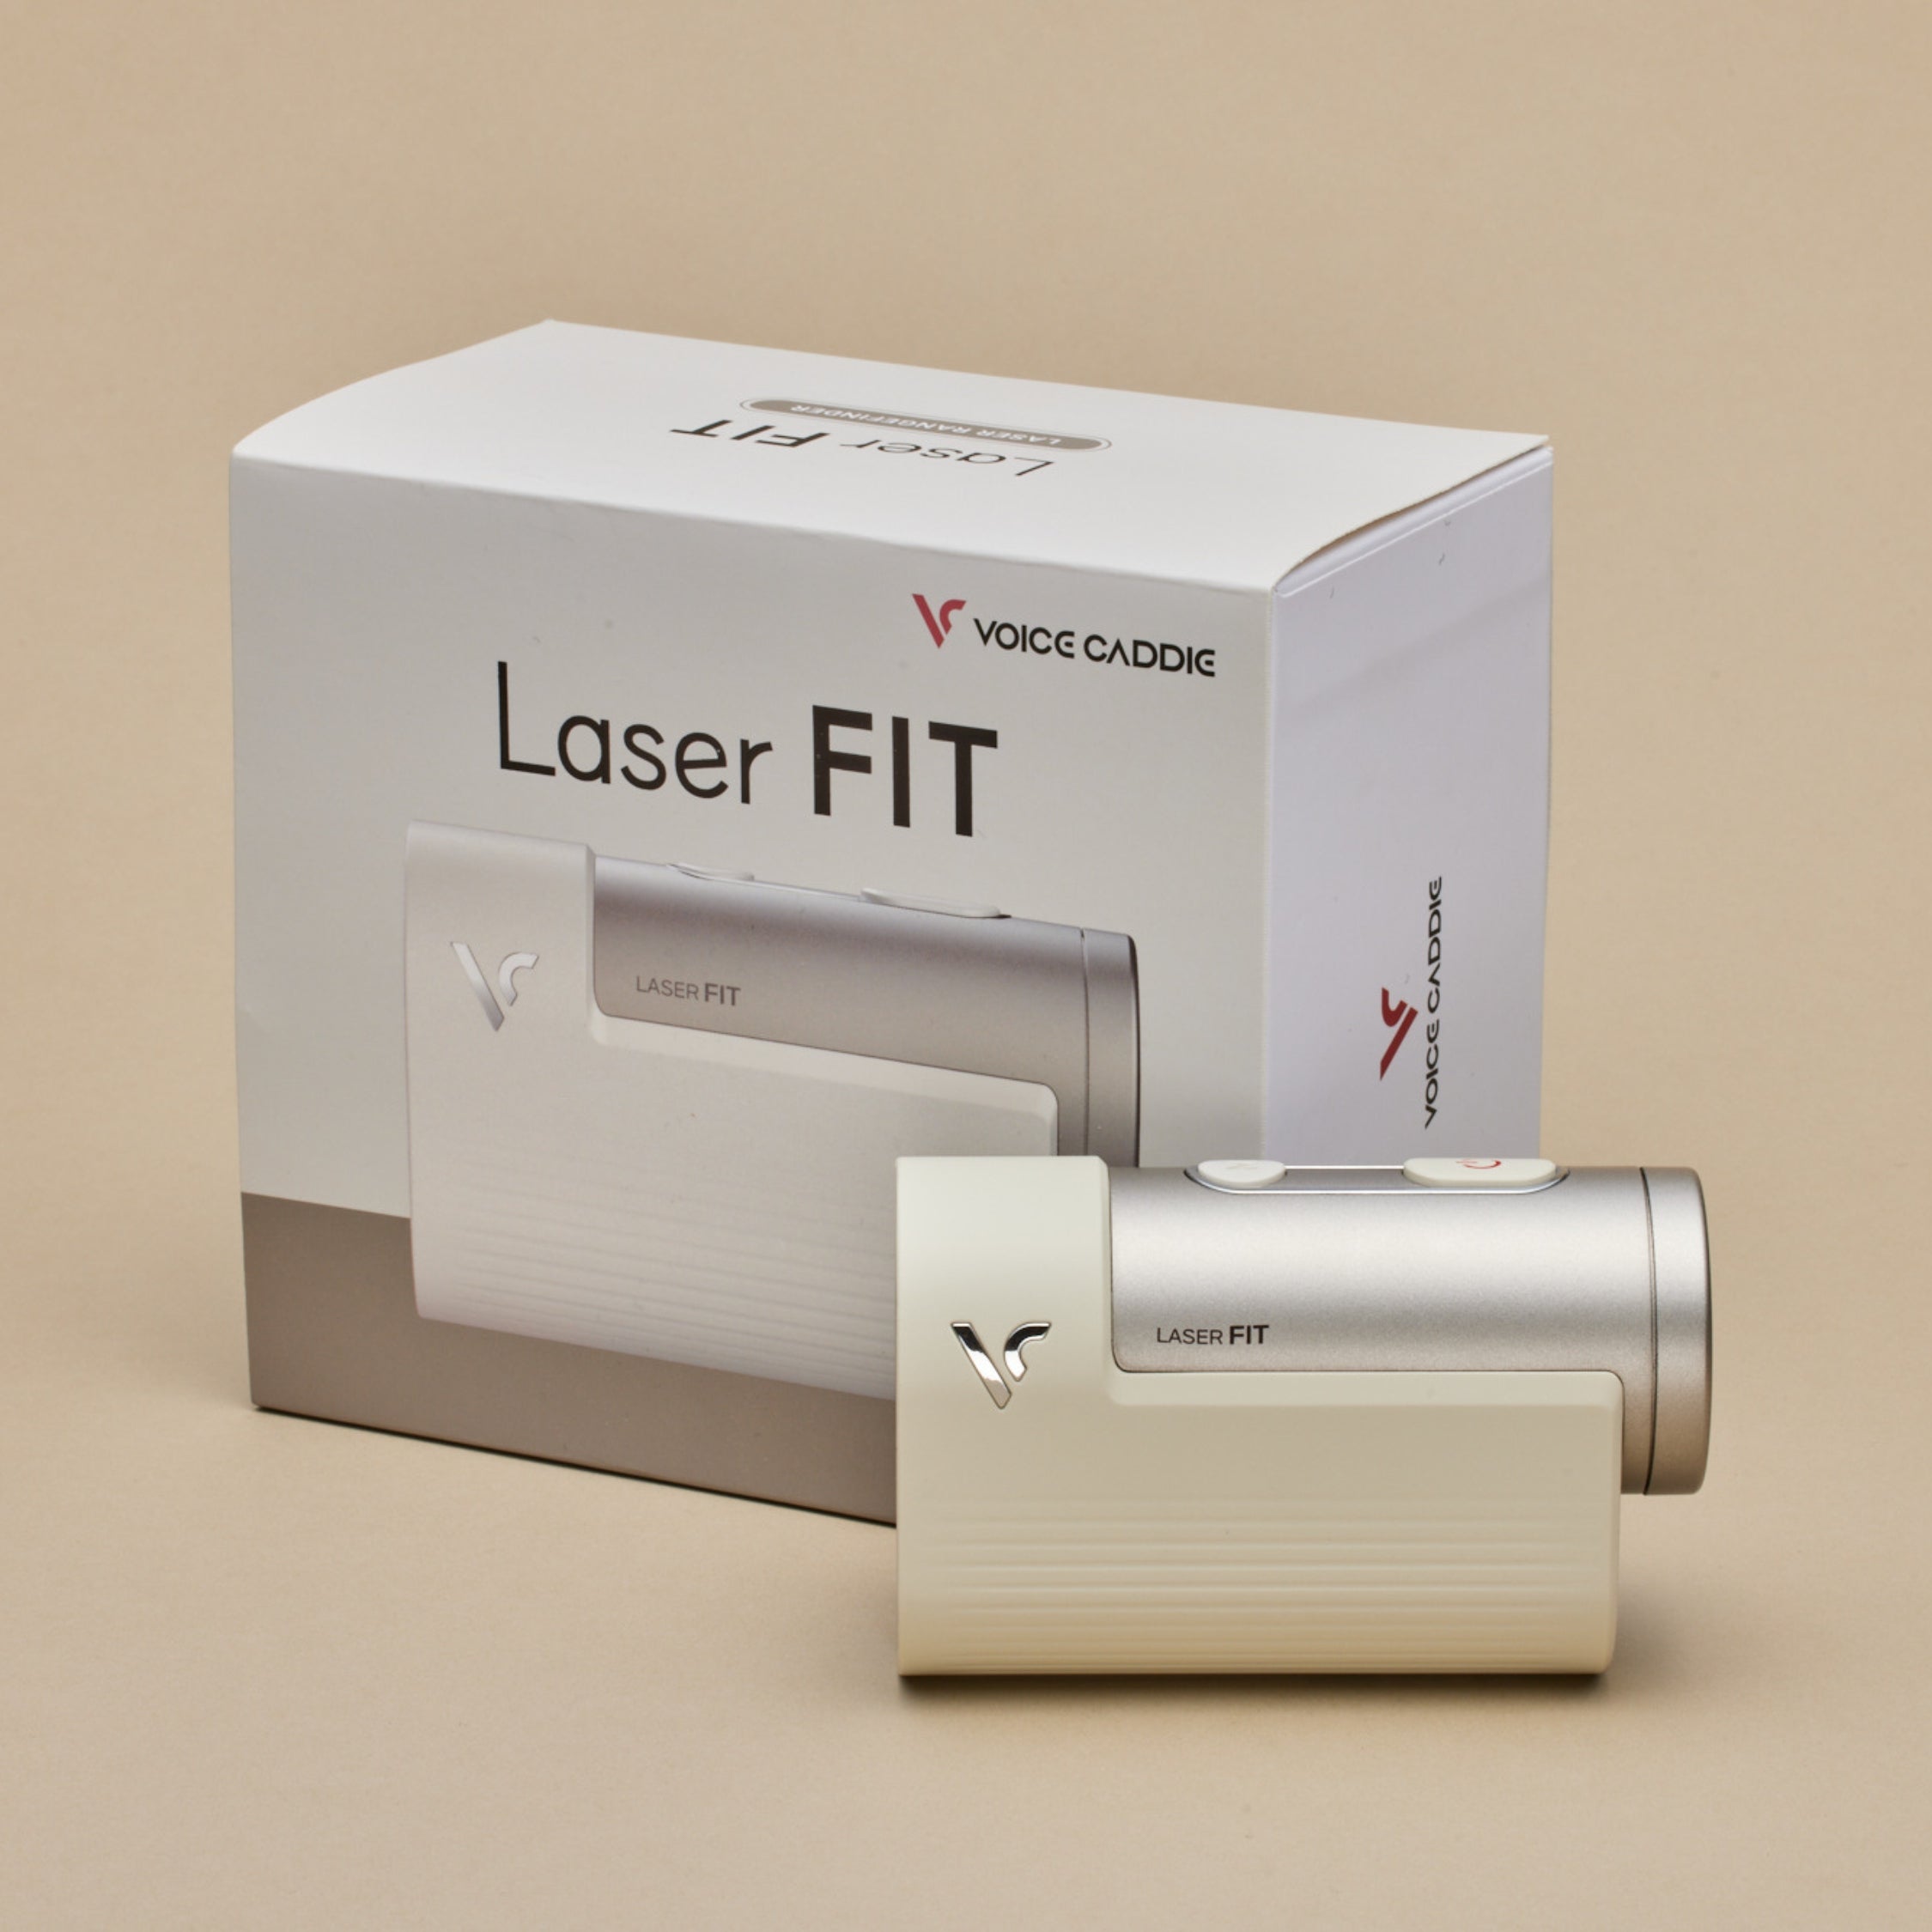 voice caddie laser fit next to packaging